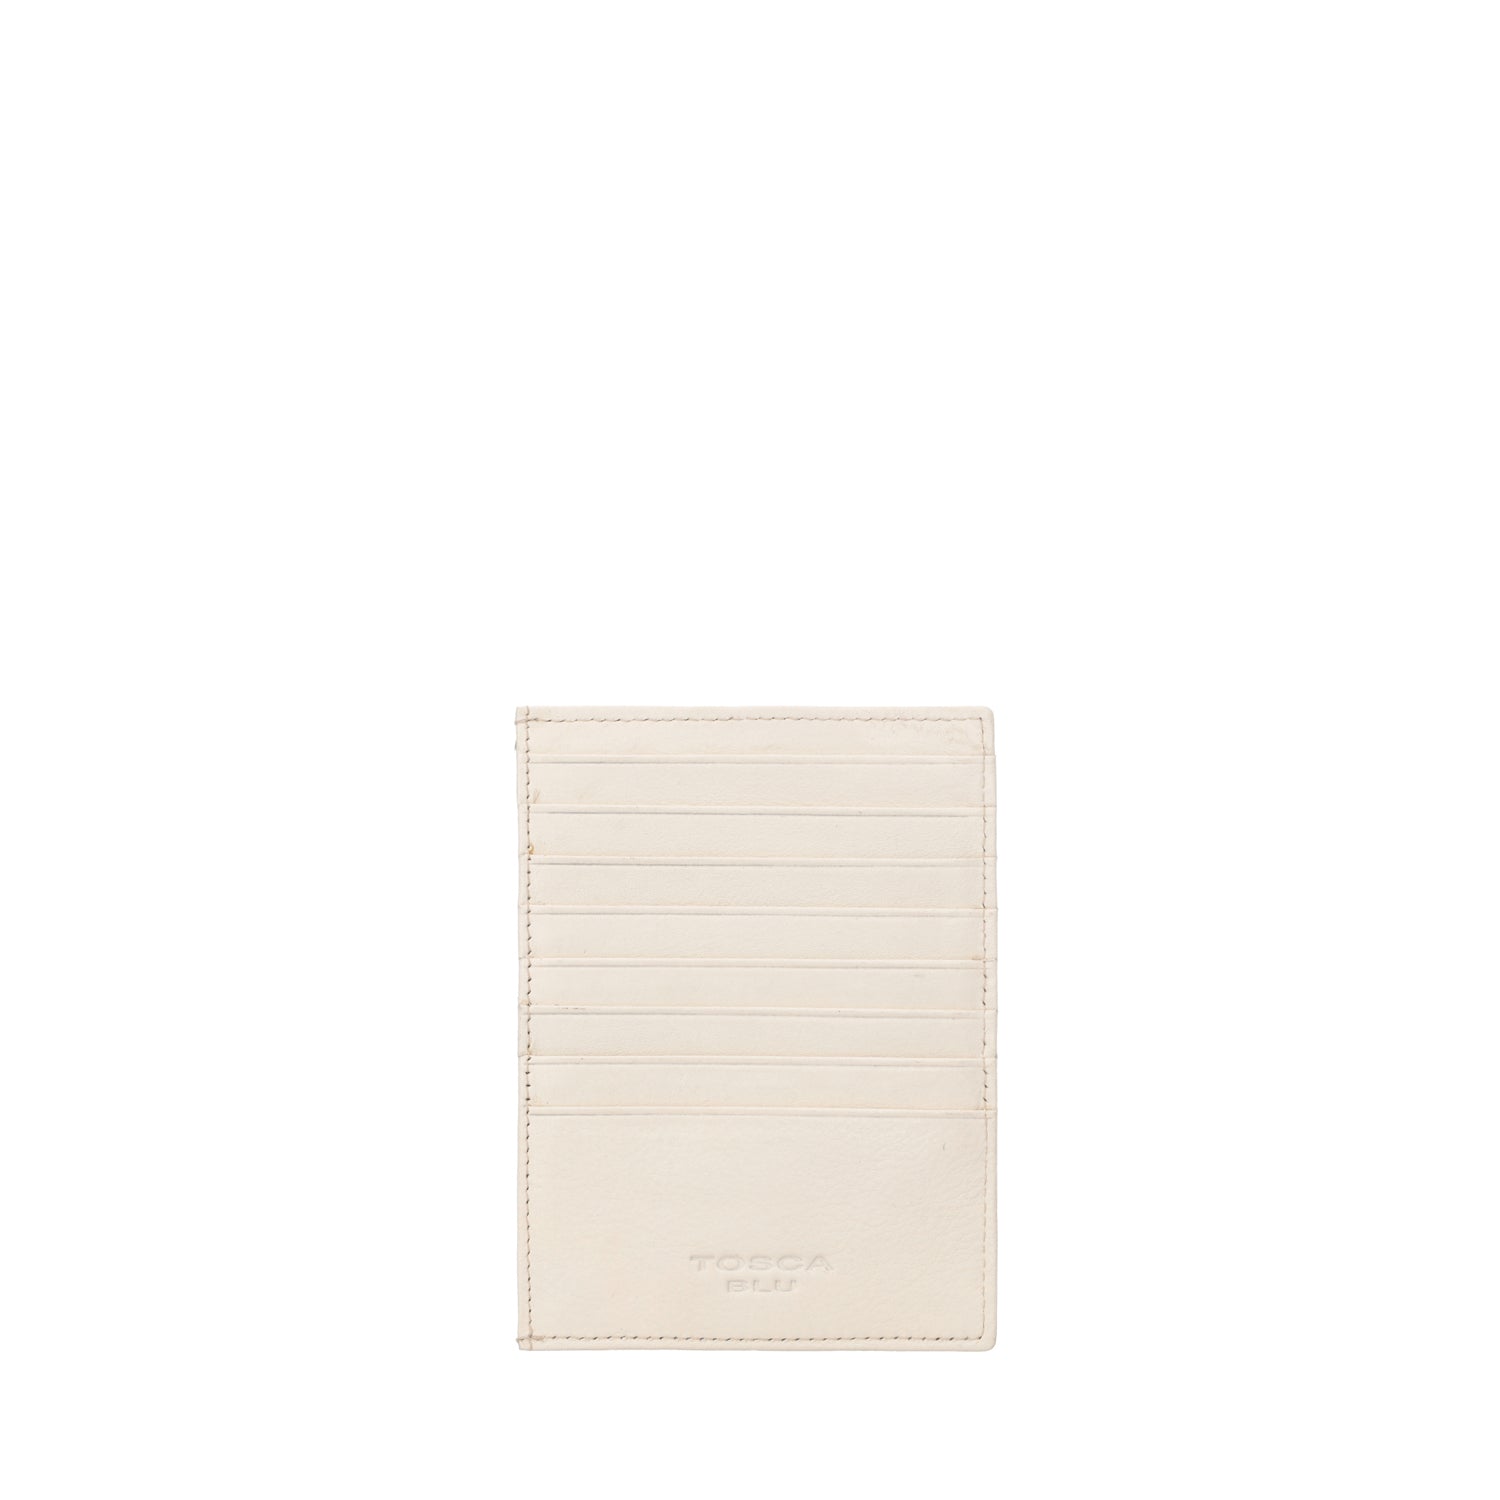 NATURAL BASIC WALLETS CARD HOLDER IN GENUINE LEATHER